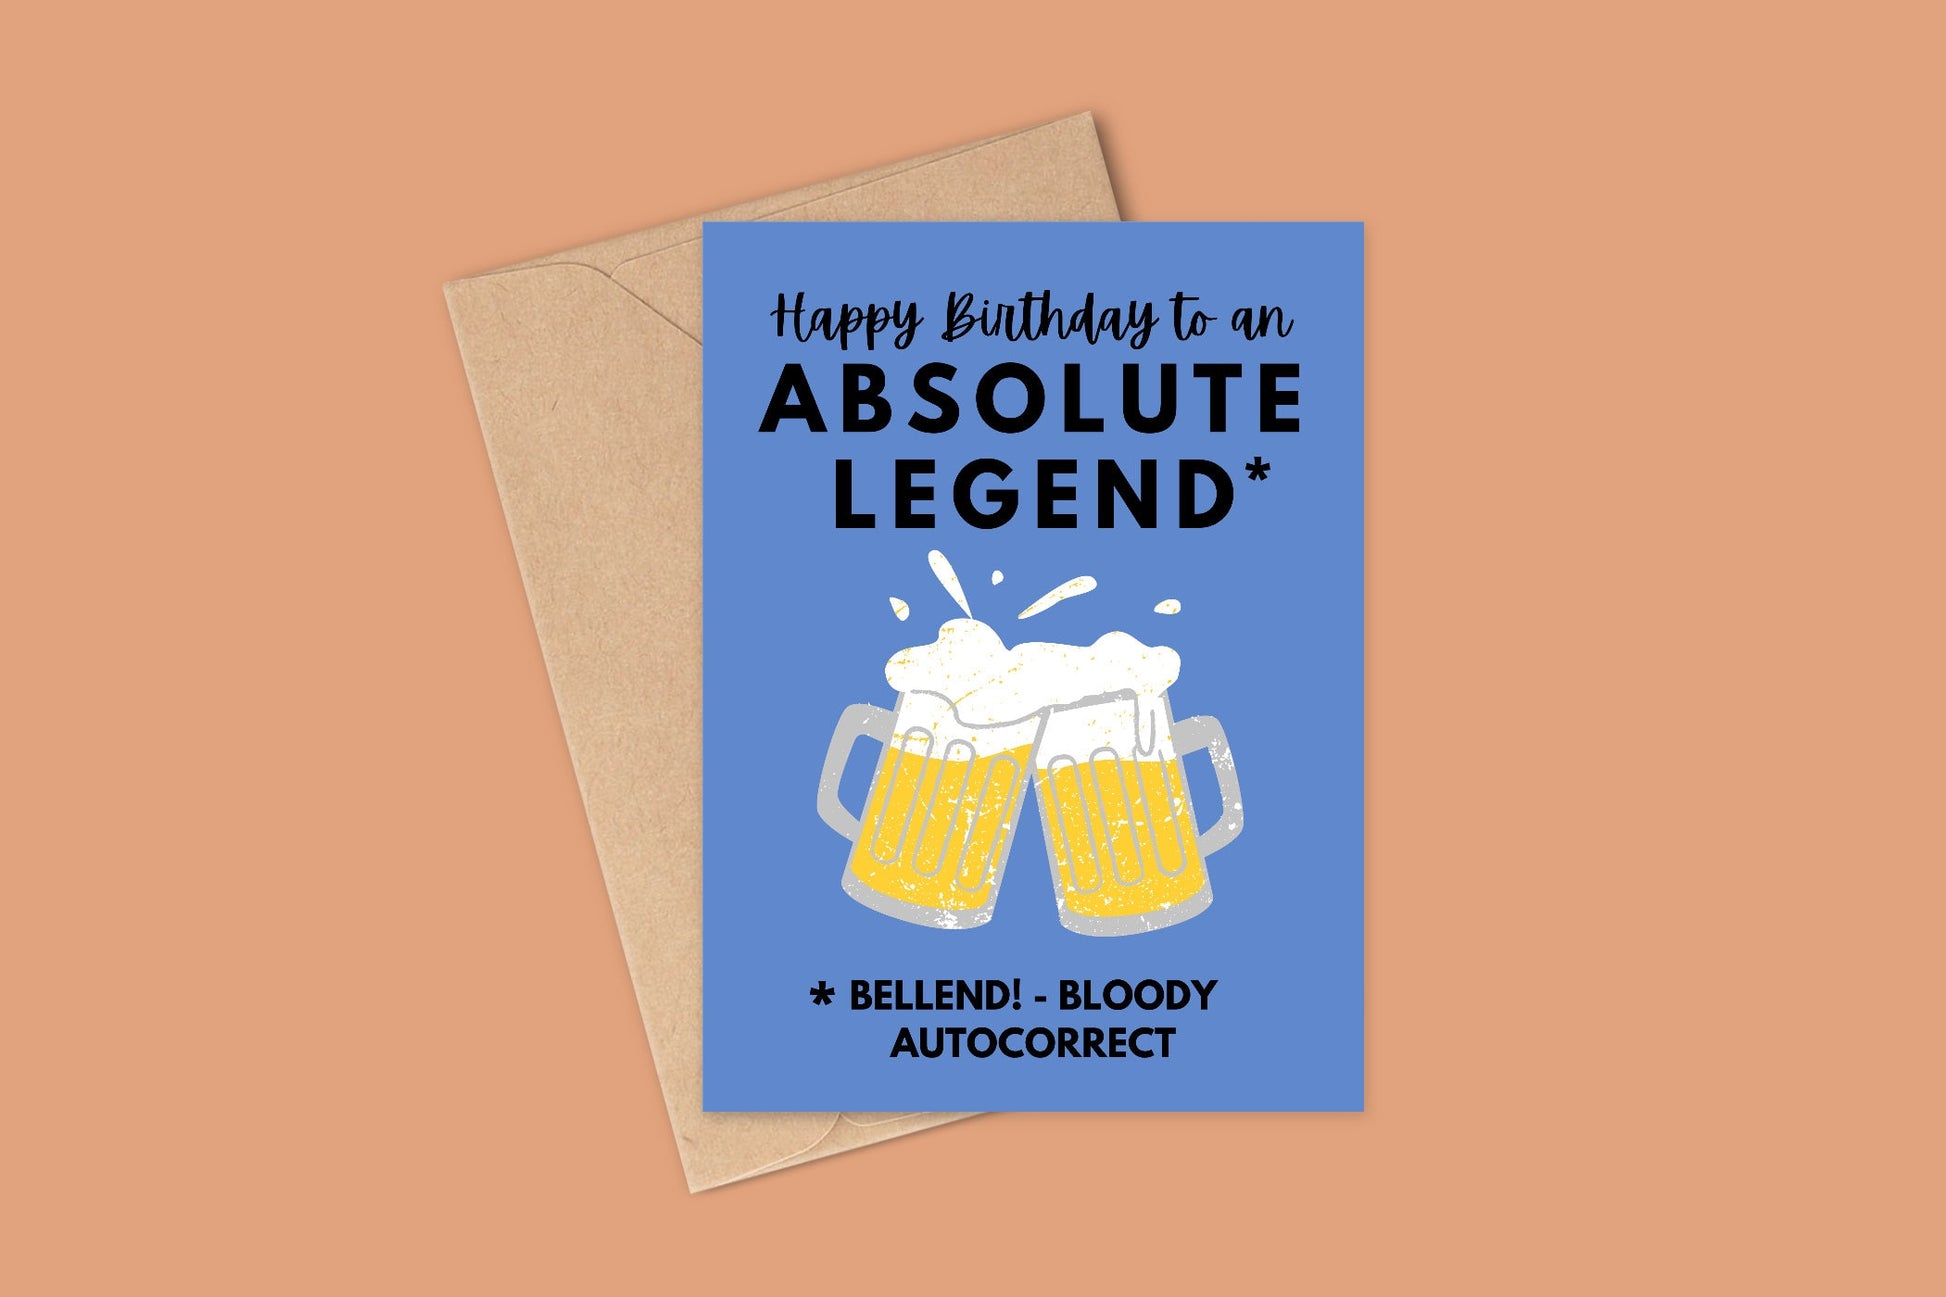 Funny Birthday Card For Him, Autocorrect Bellend Card, Funny Card, Birthday card, Autocorrect Cards, Funny Birthday Cards, Card for mates,